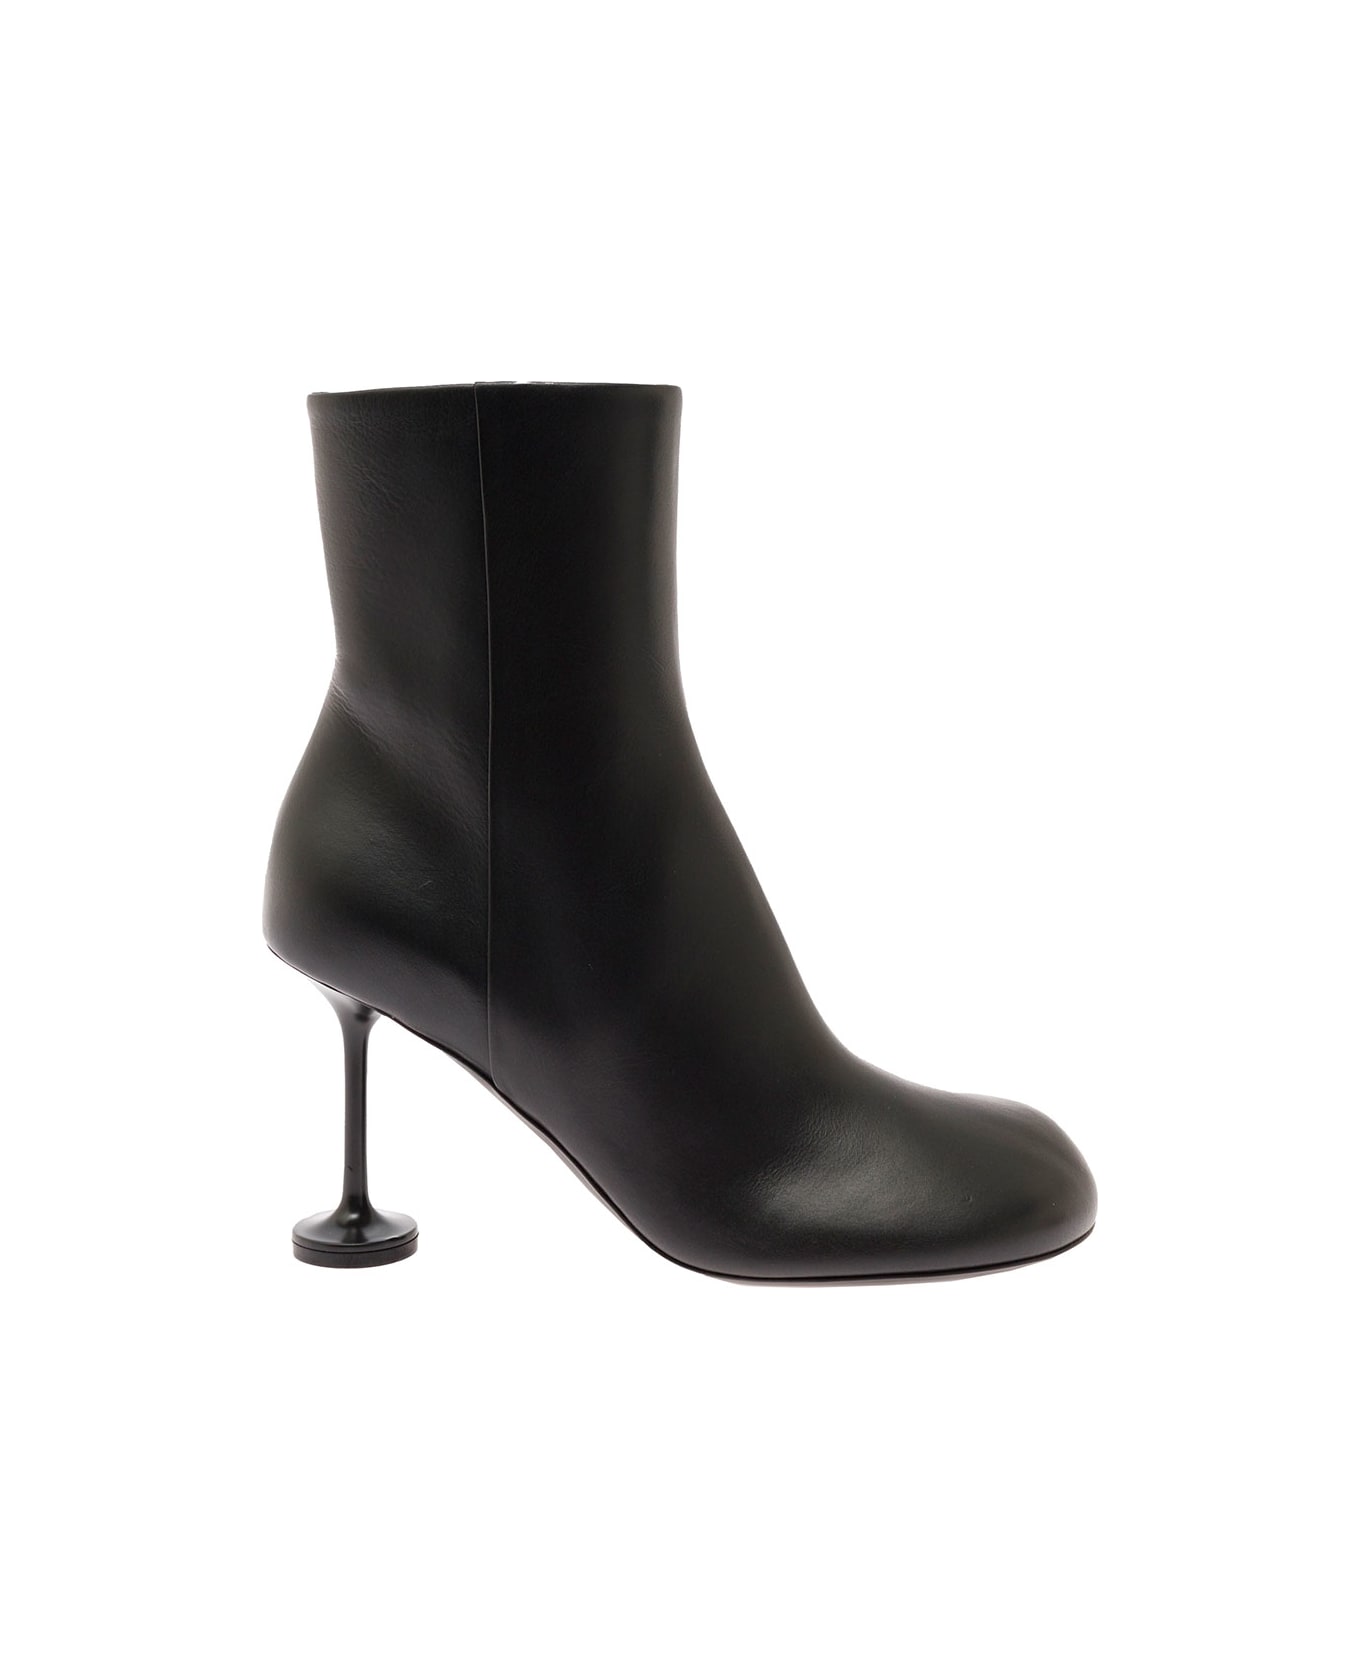 Balenciaga Black Lady Booties In Leather With 90 Mm Champagne Heel Balenciaga Woman - Black